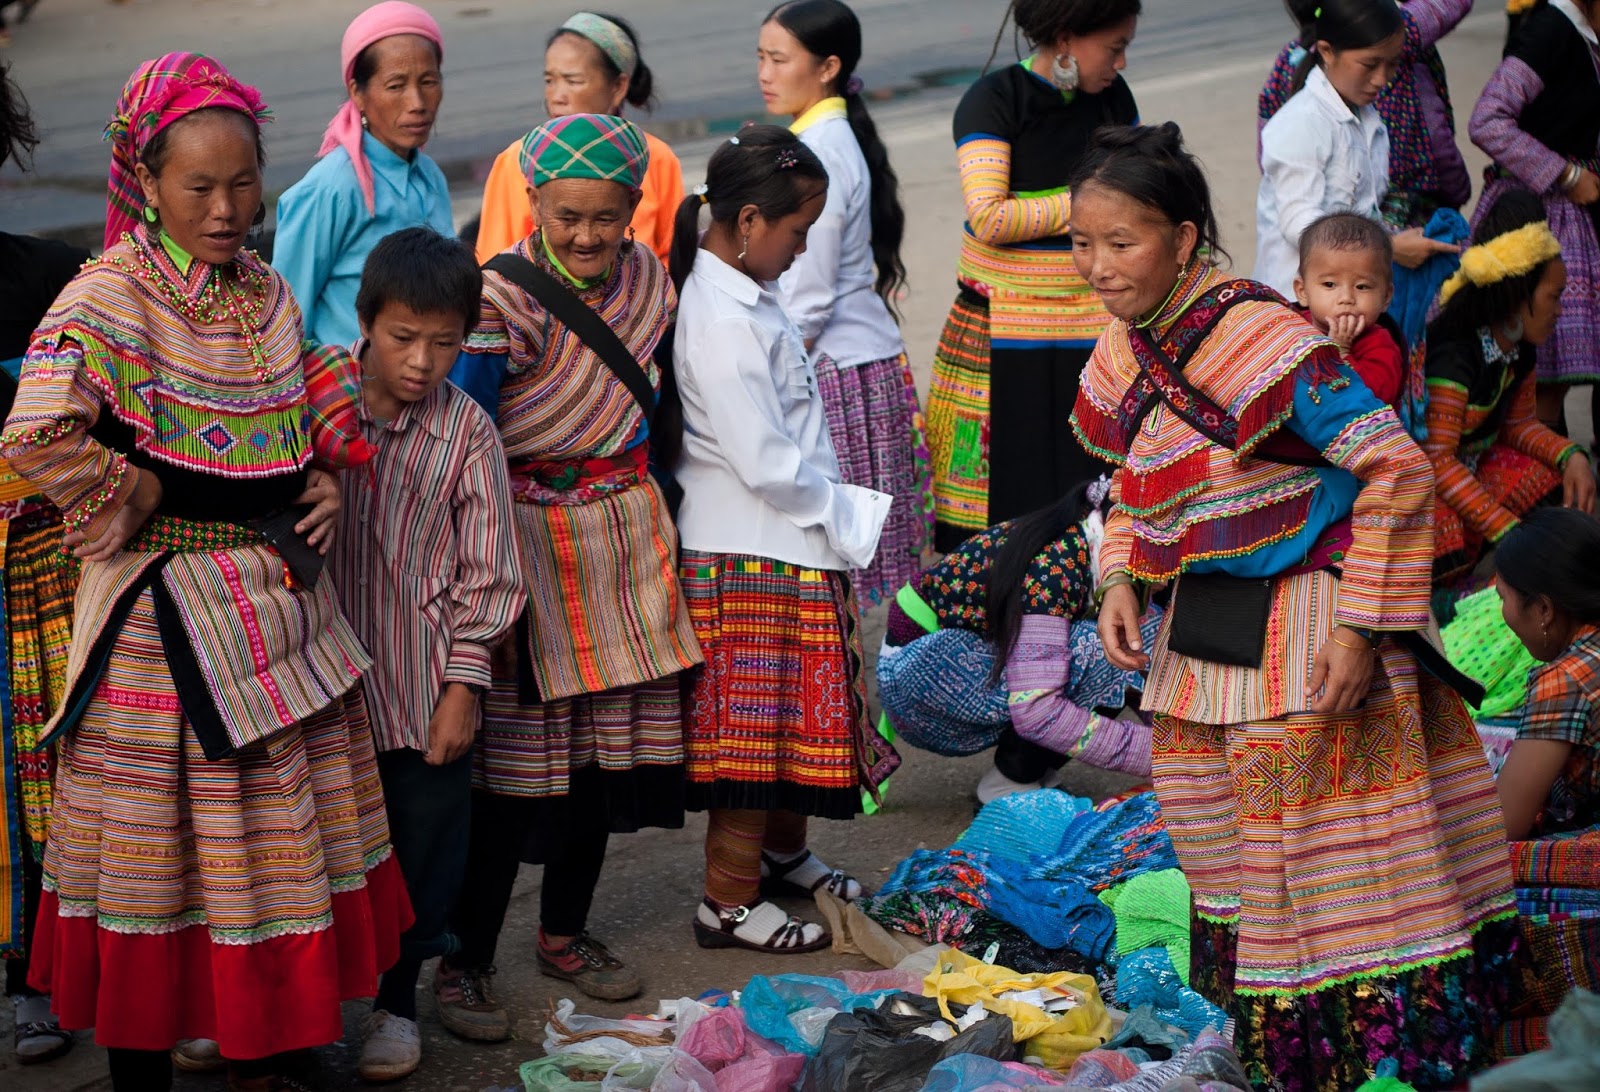 Costume traditionnel du peuple Hmong